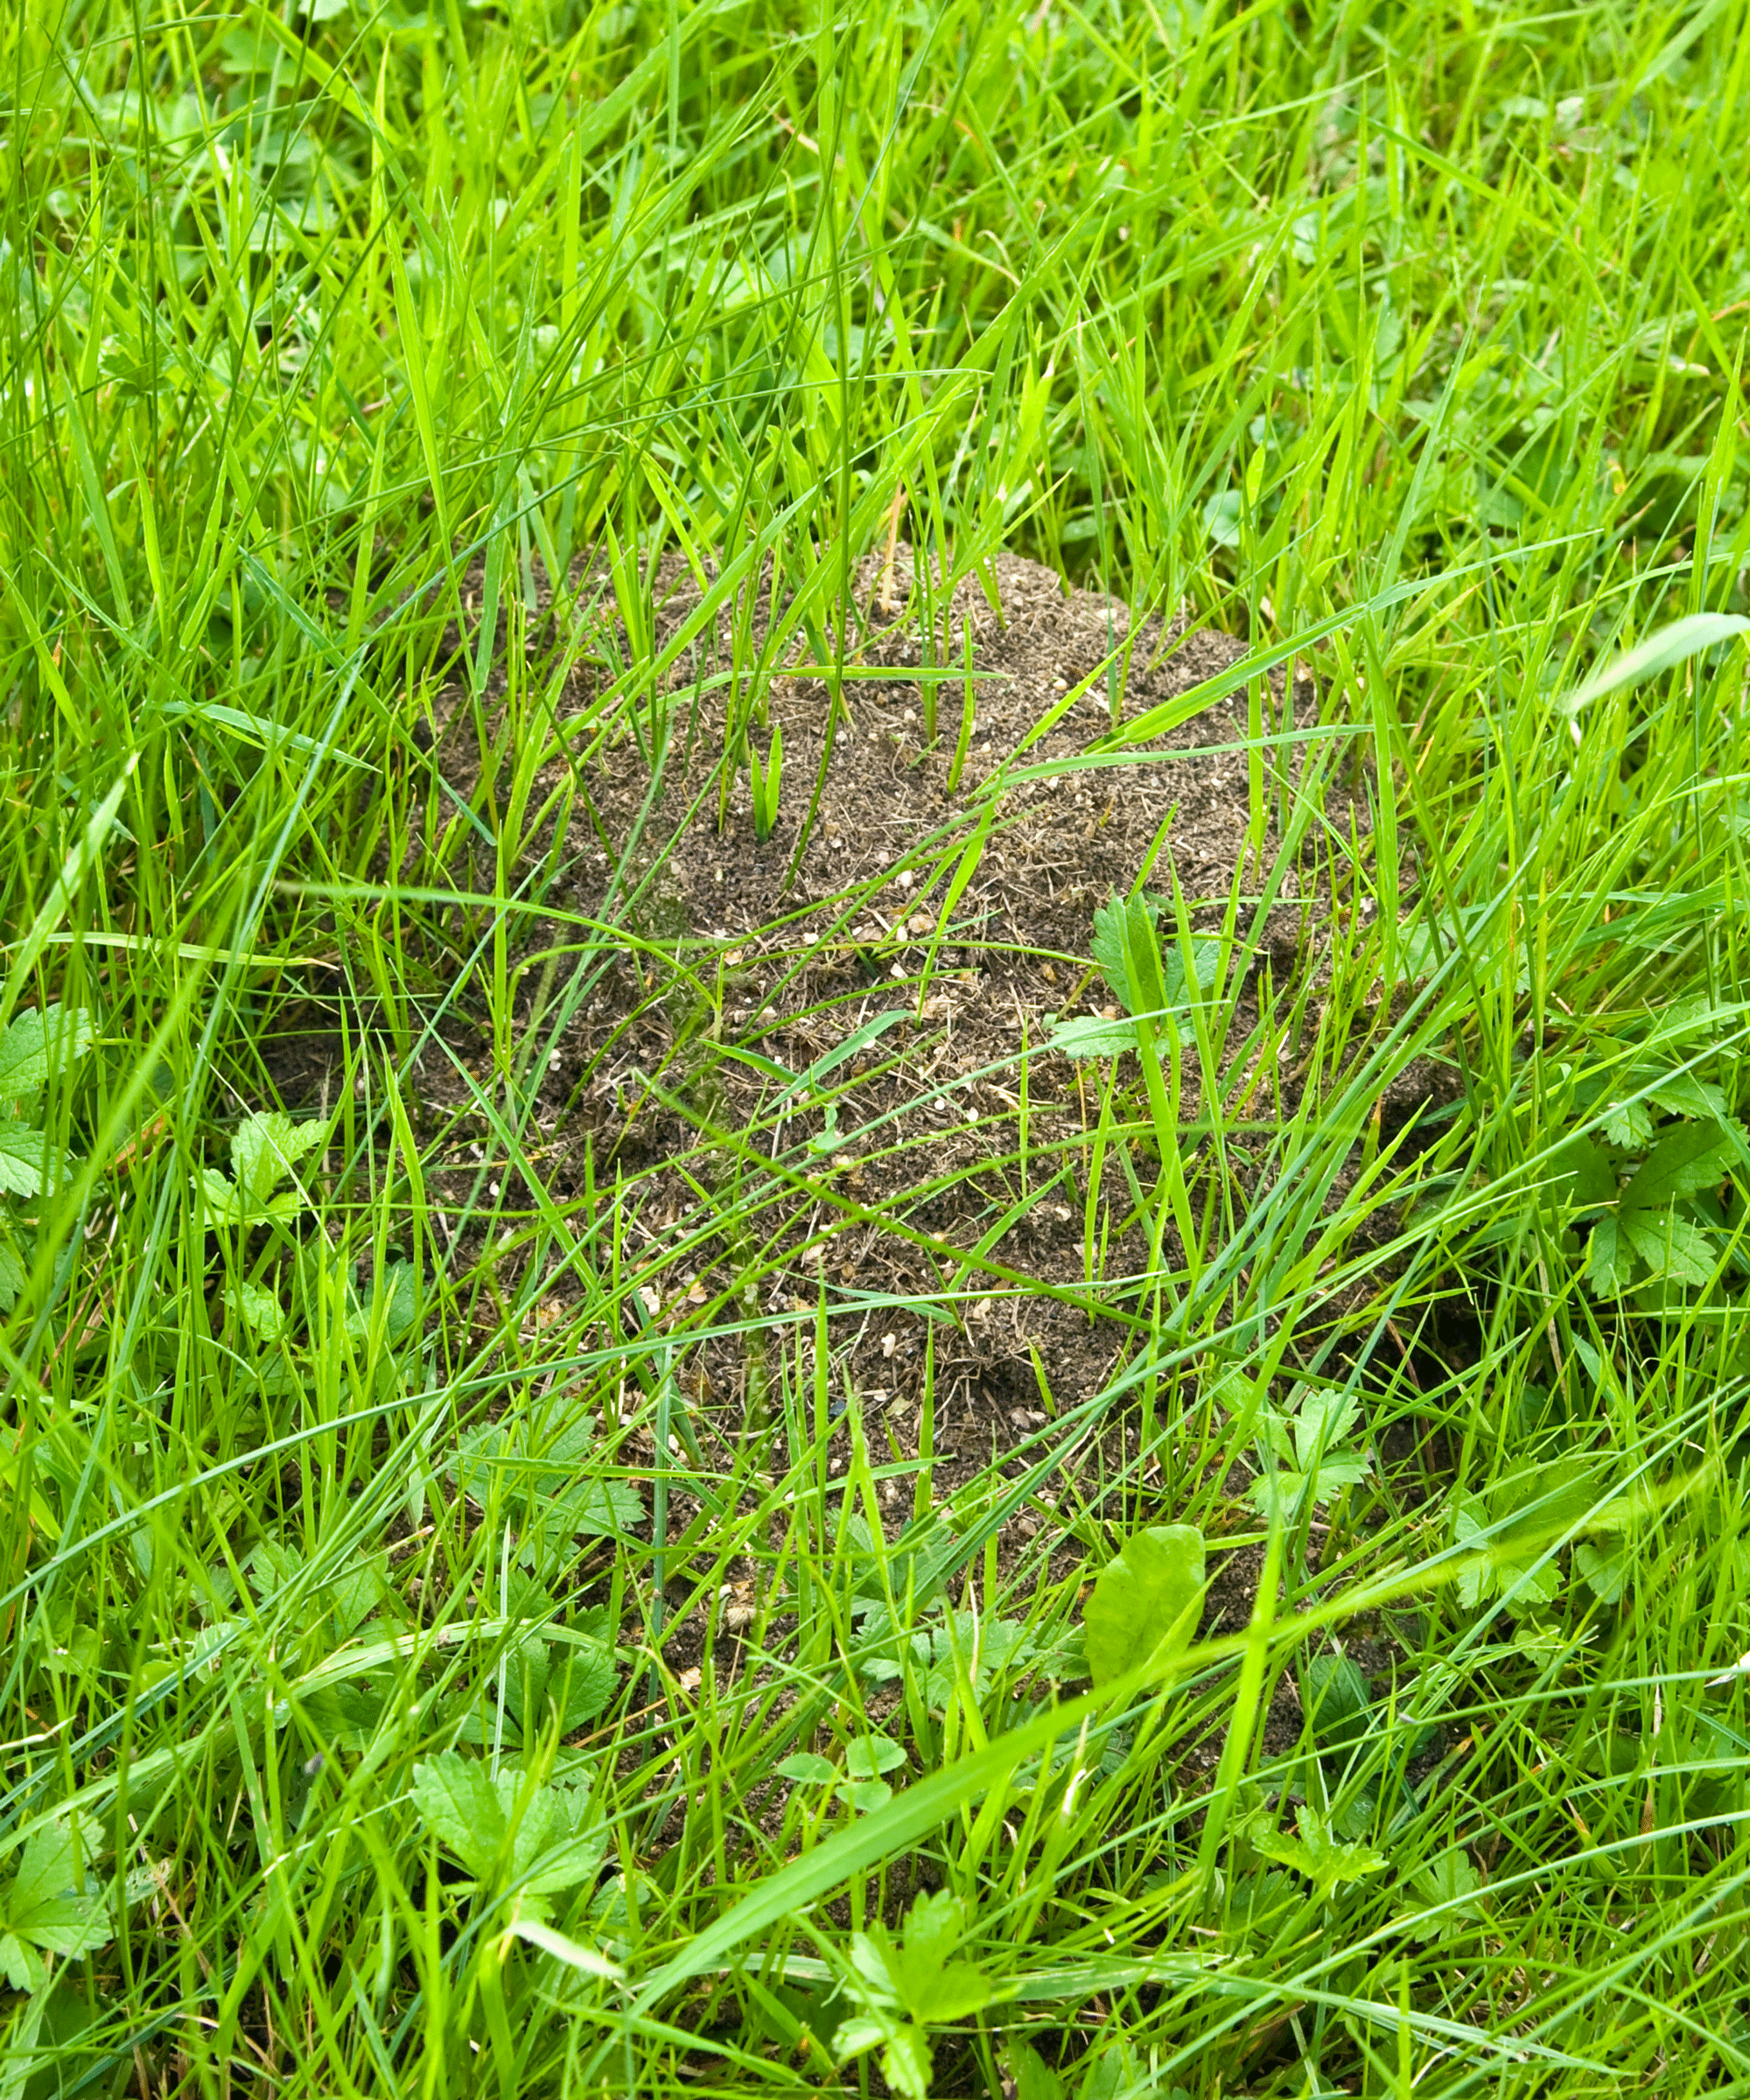 ants nest in grass